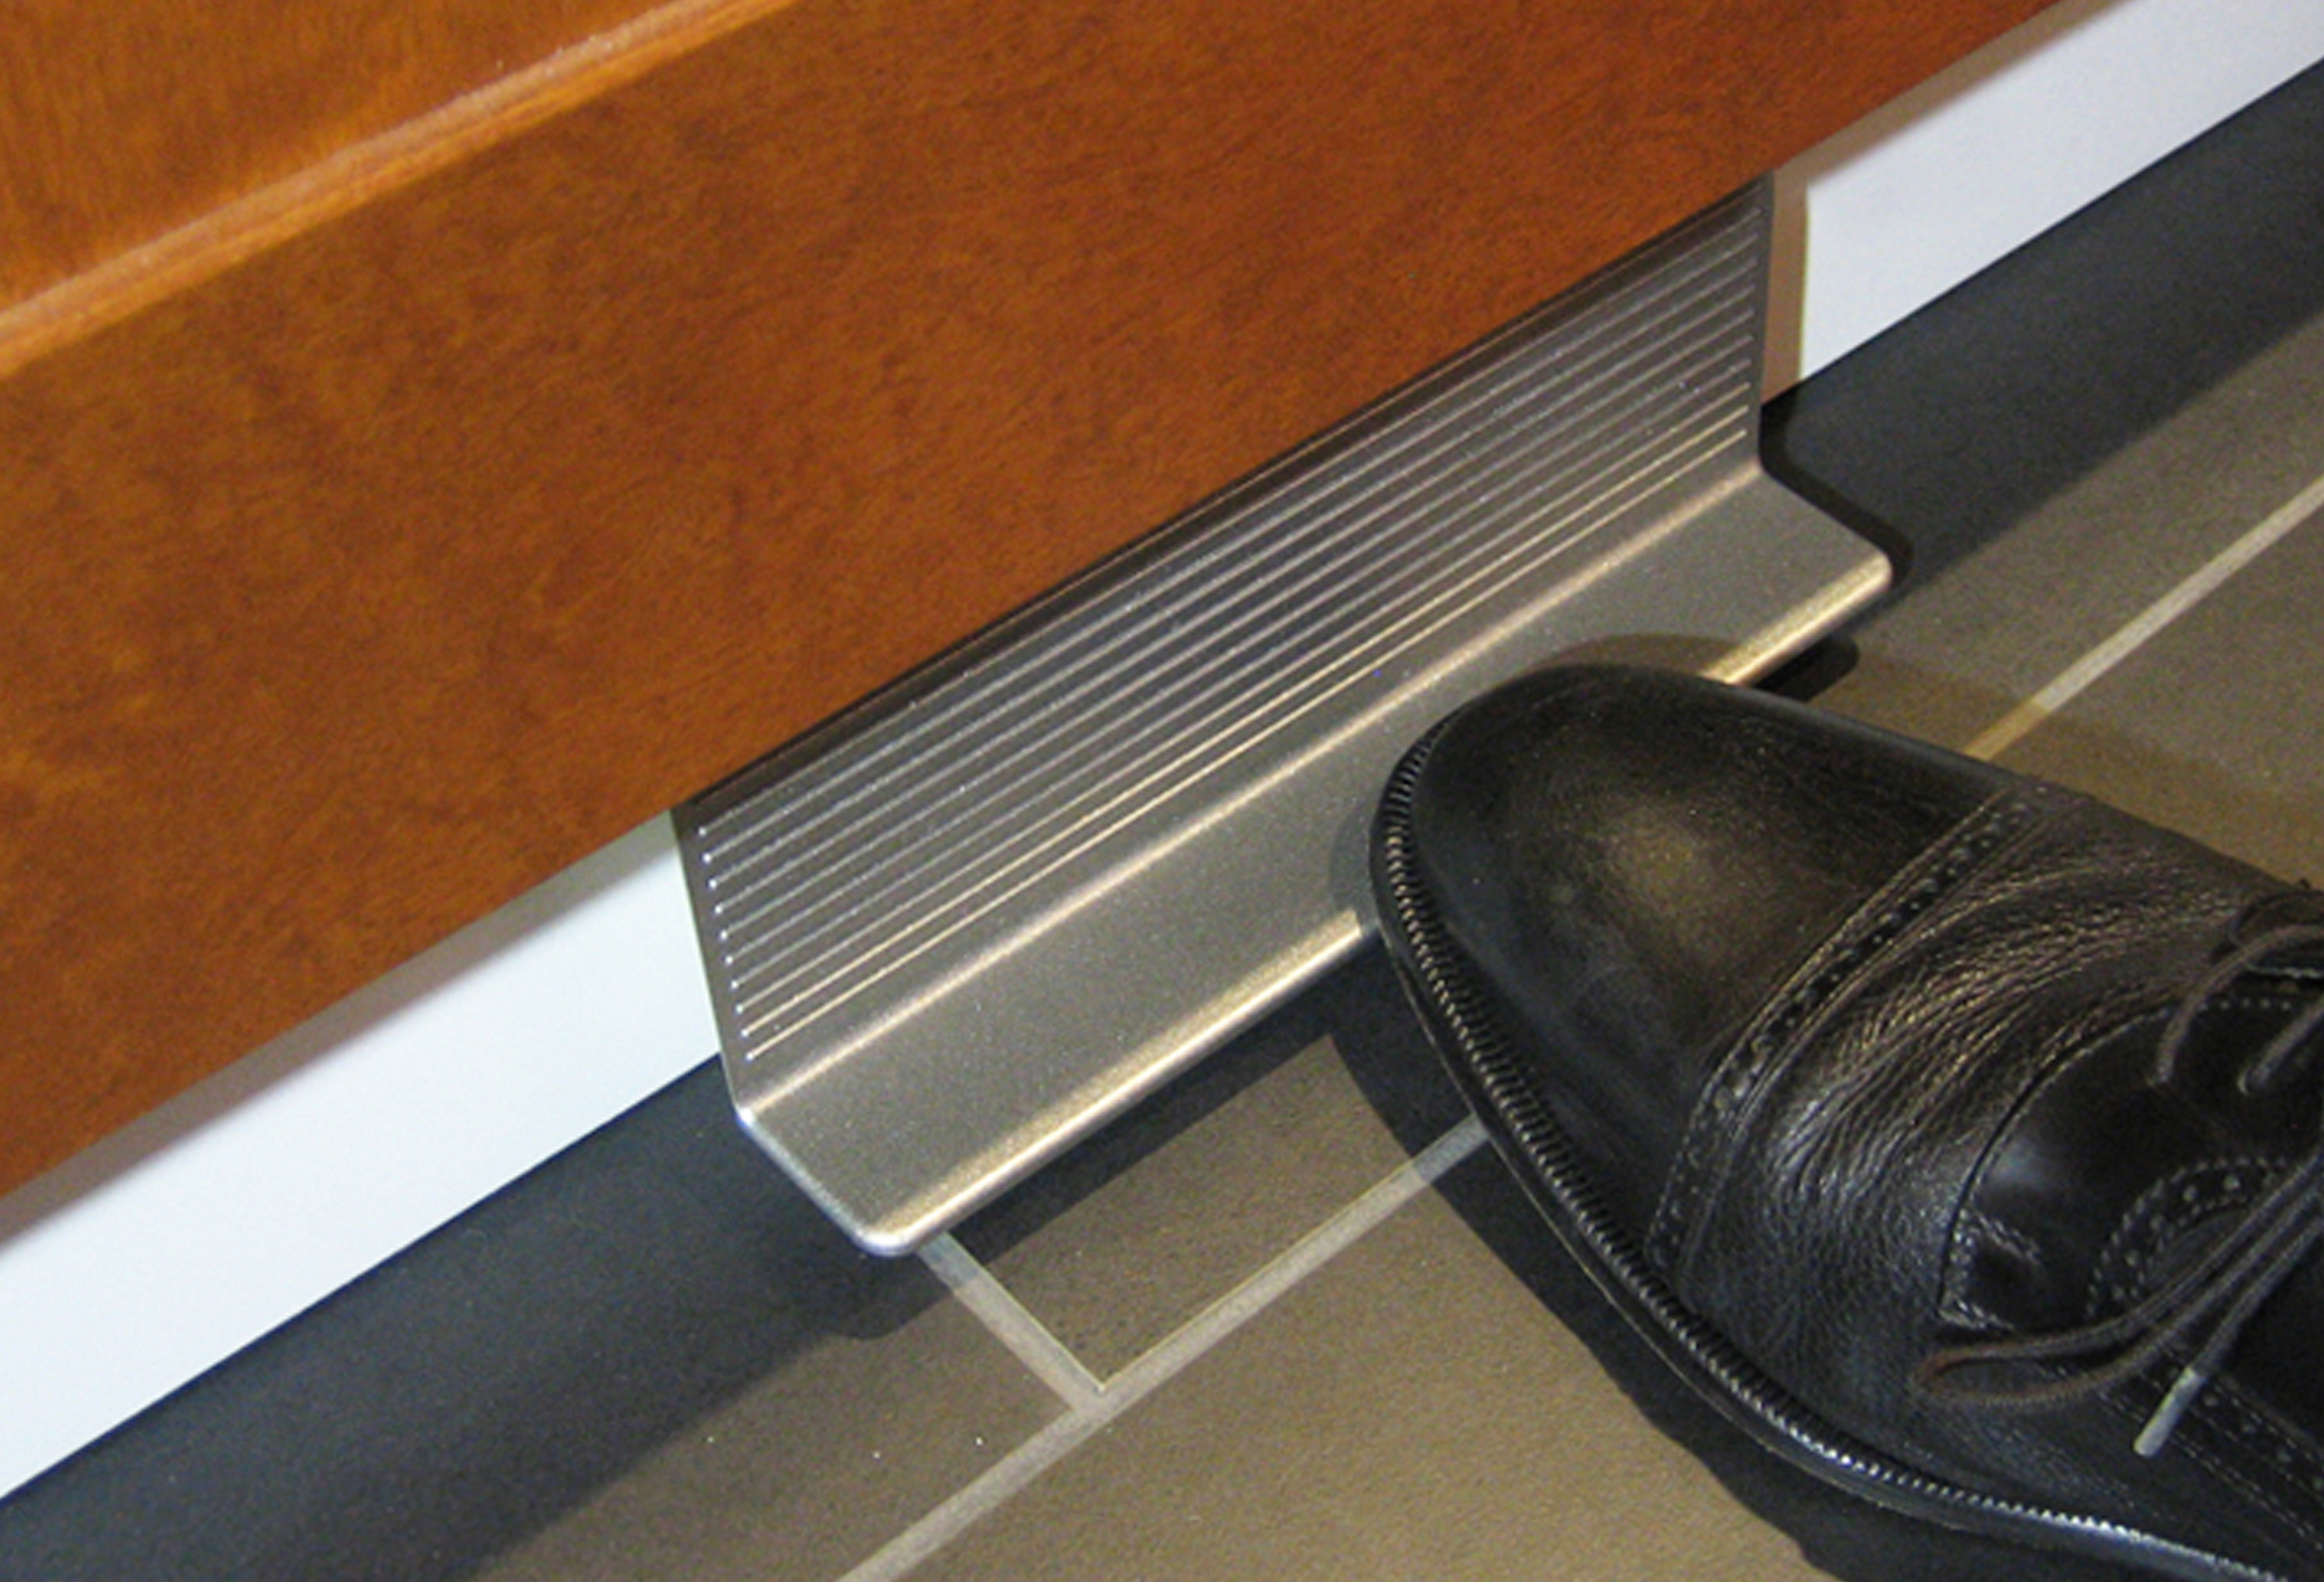 a black shoe next to a metal object